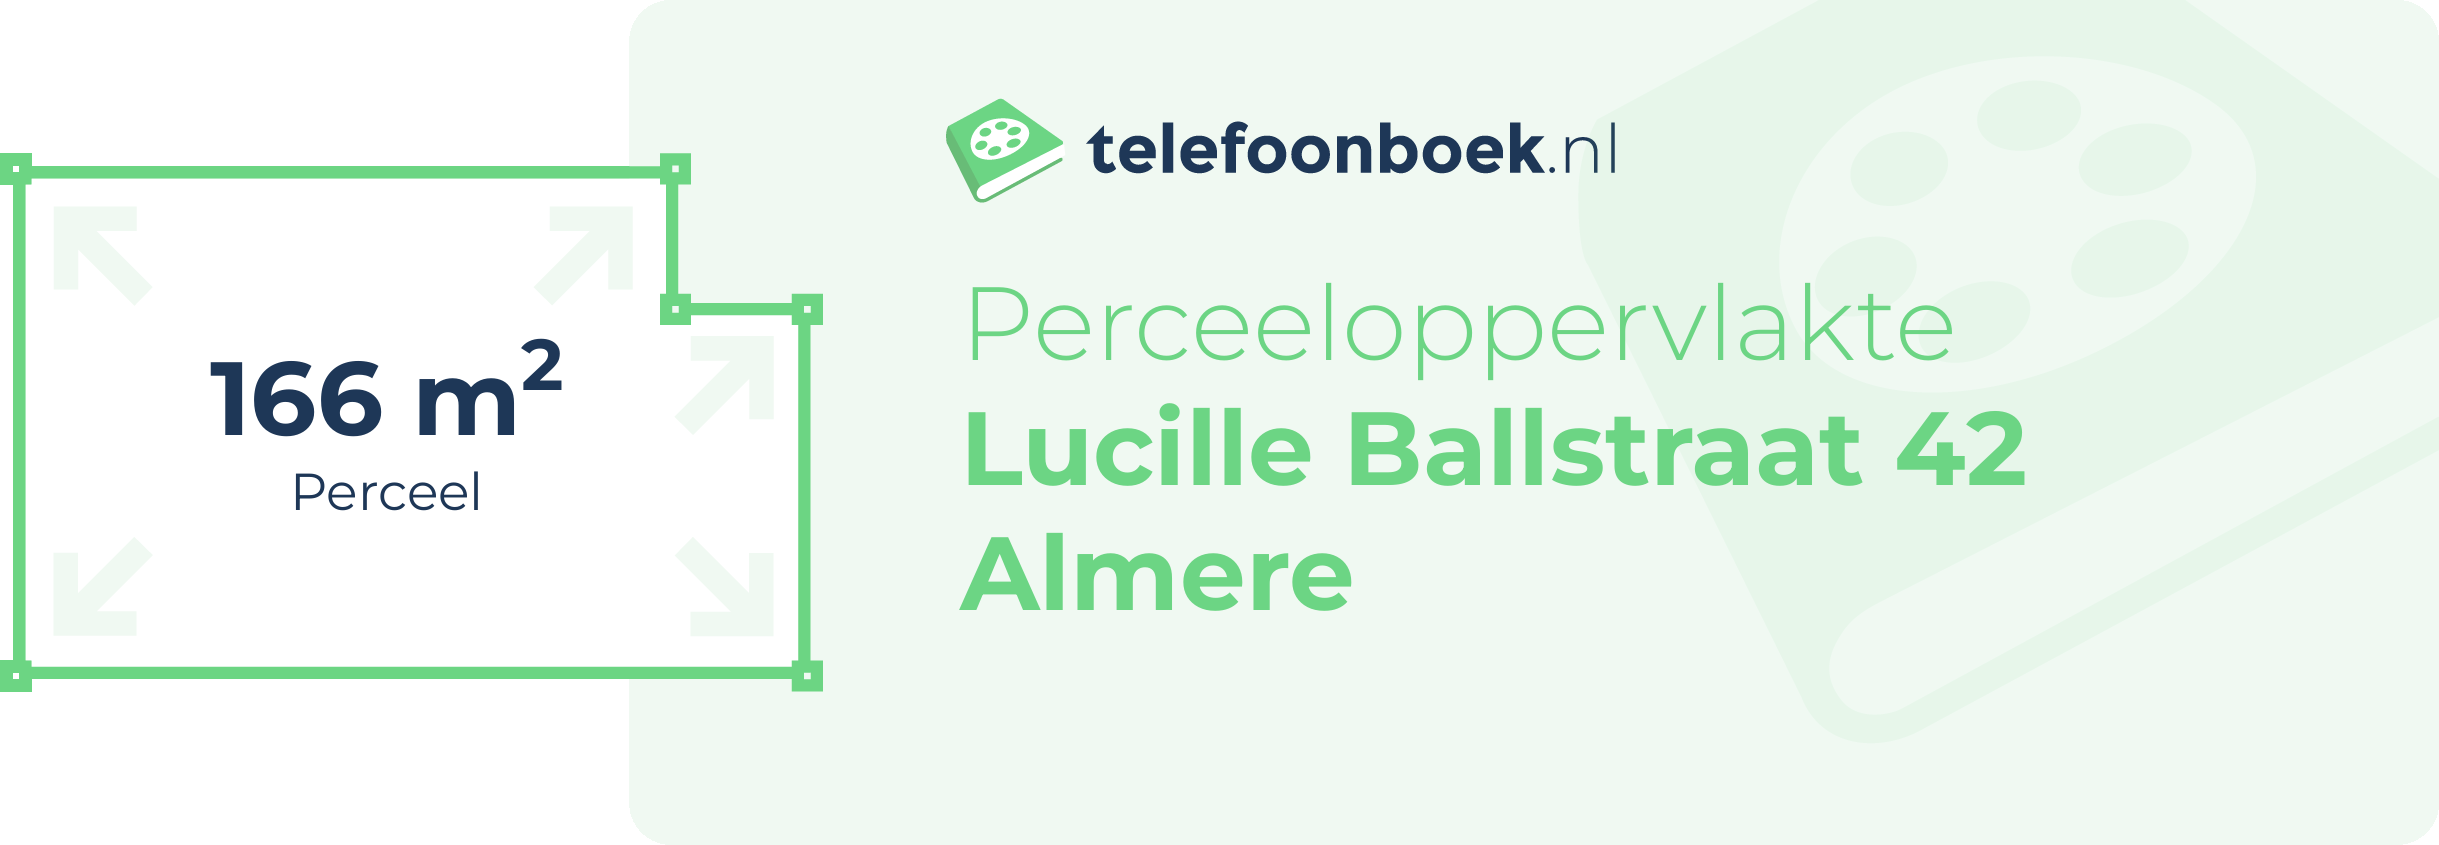 Perceeloppervlakte Lucille Ballstraat 42 Almere